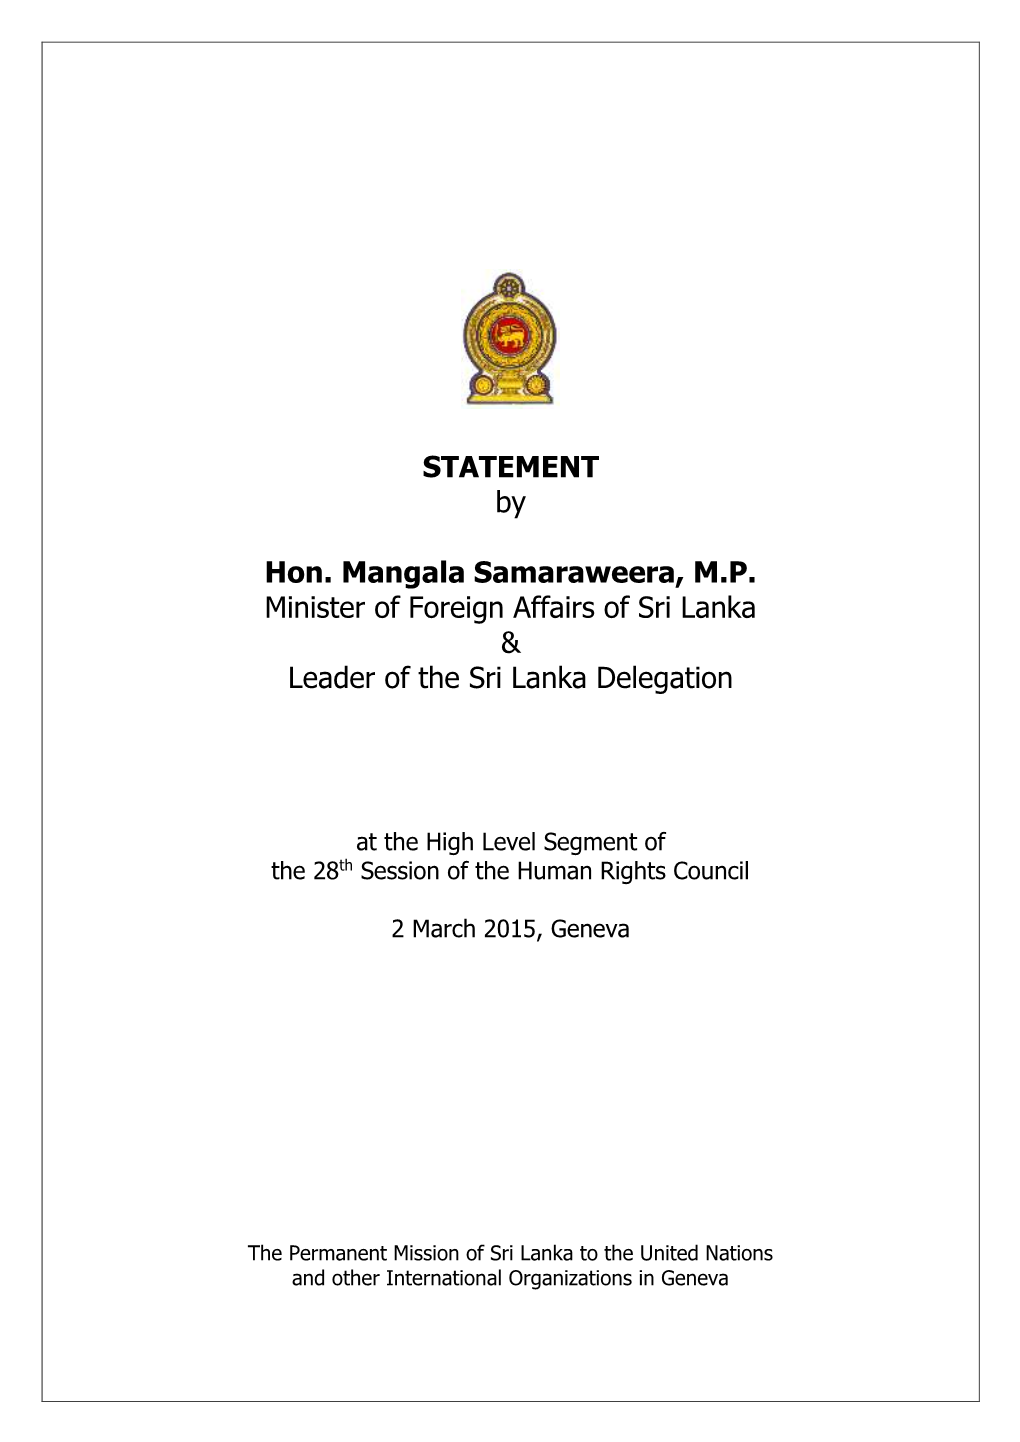 STATEMENT by Hon. Mangala Samaraweera, M.P. Minister Of